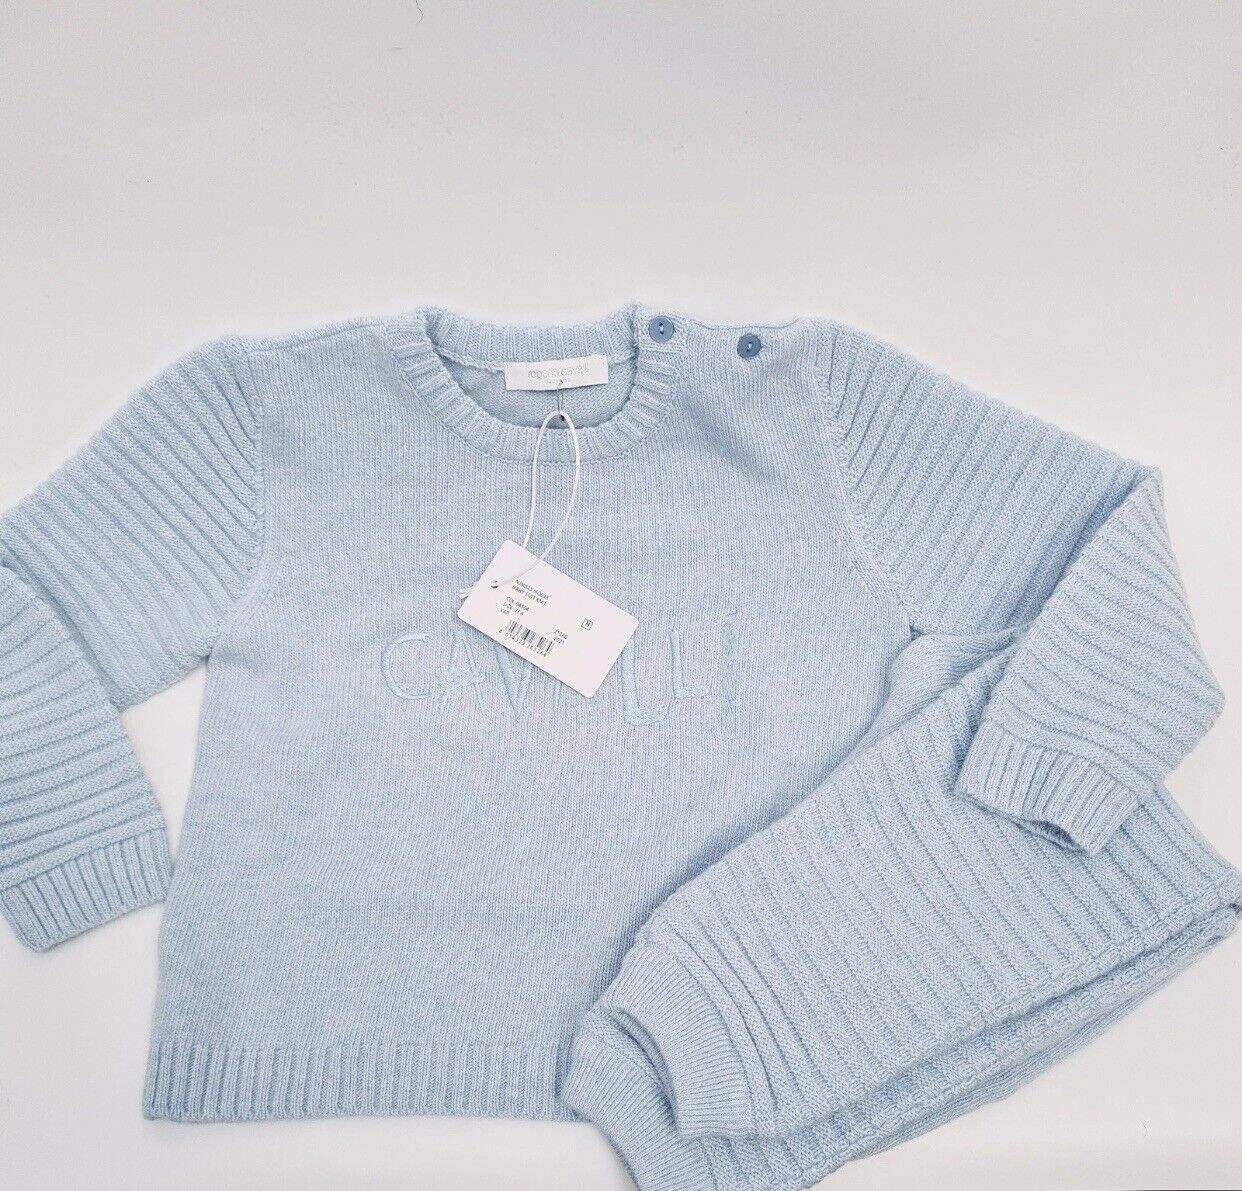 Roberto Cavalli Junior Baby Suit Knitted Blue BNWT Ref****V17